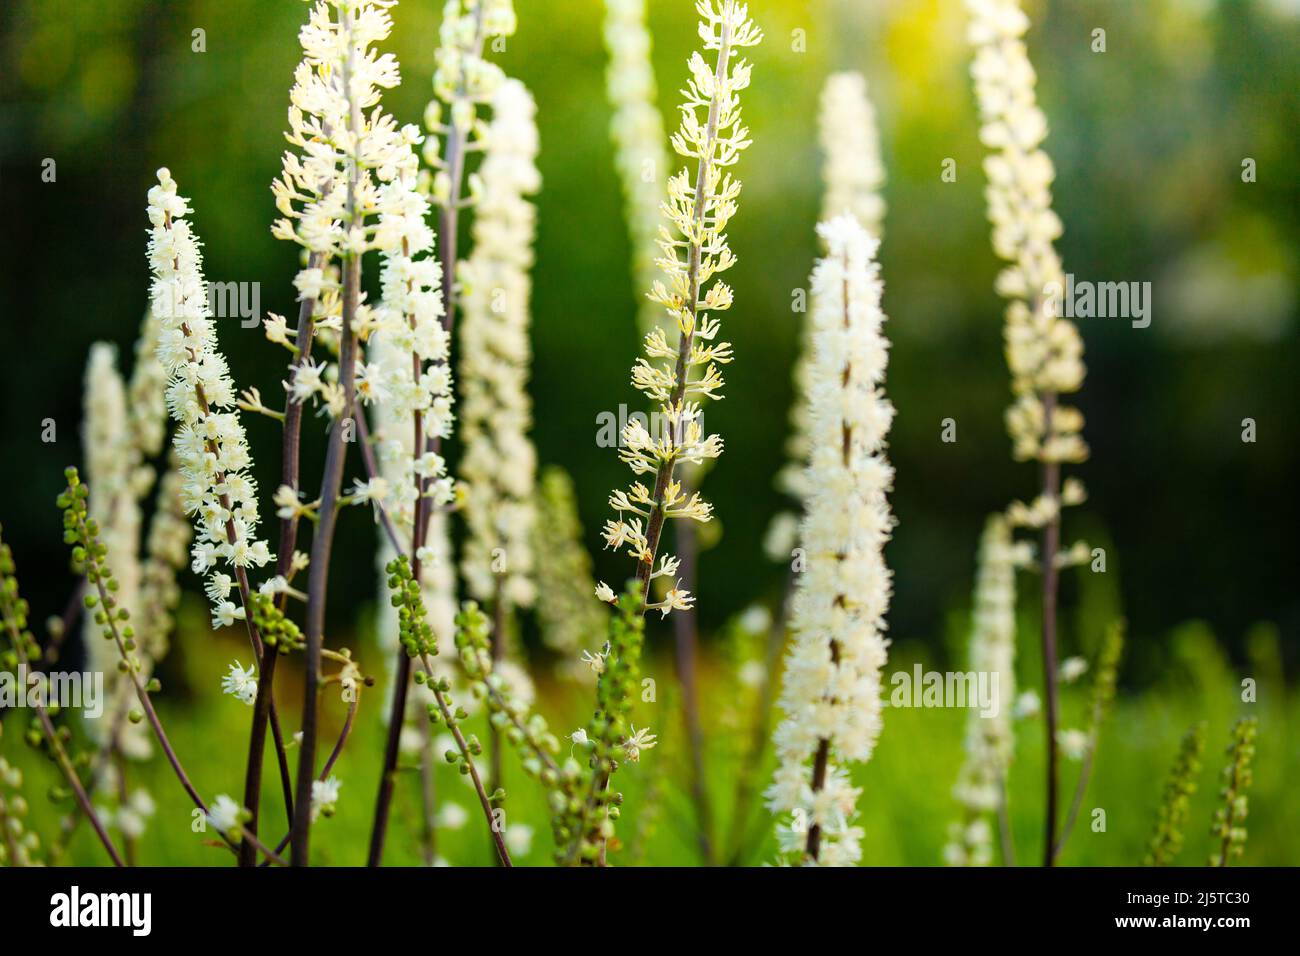 Veronicastrum flowers close-up over green garden background Stock Photo